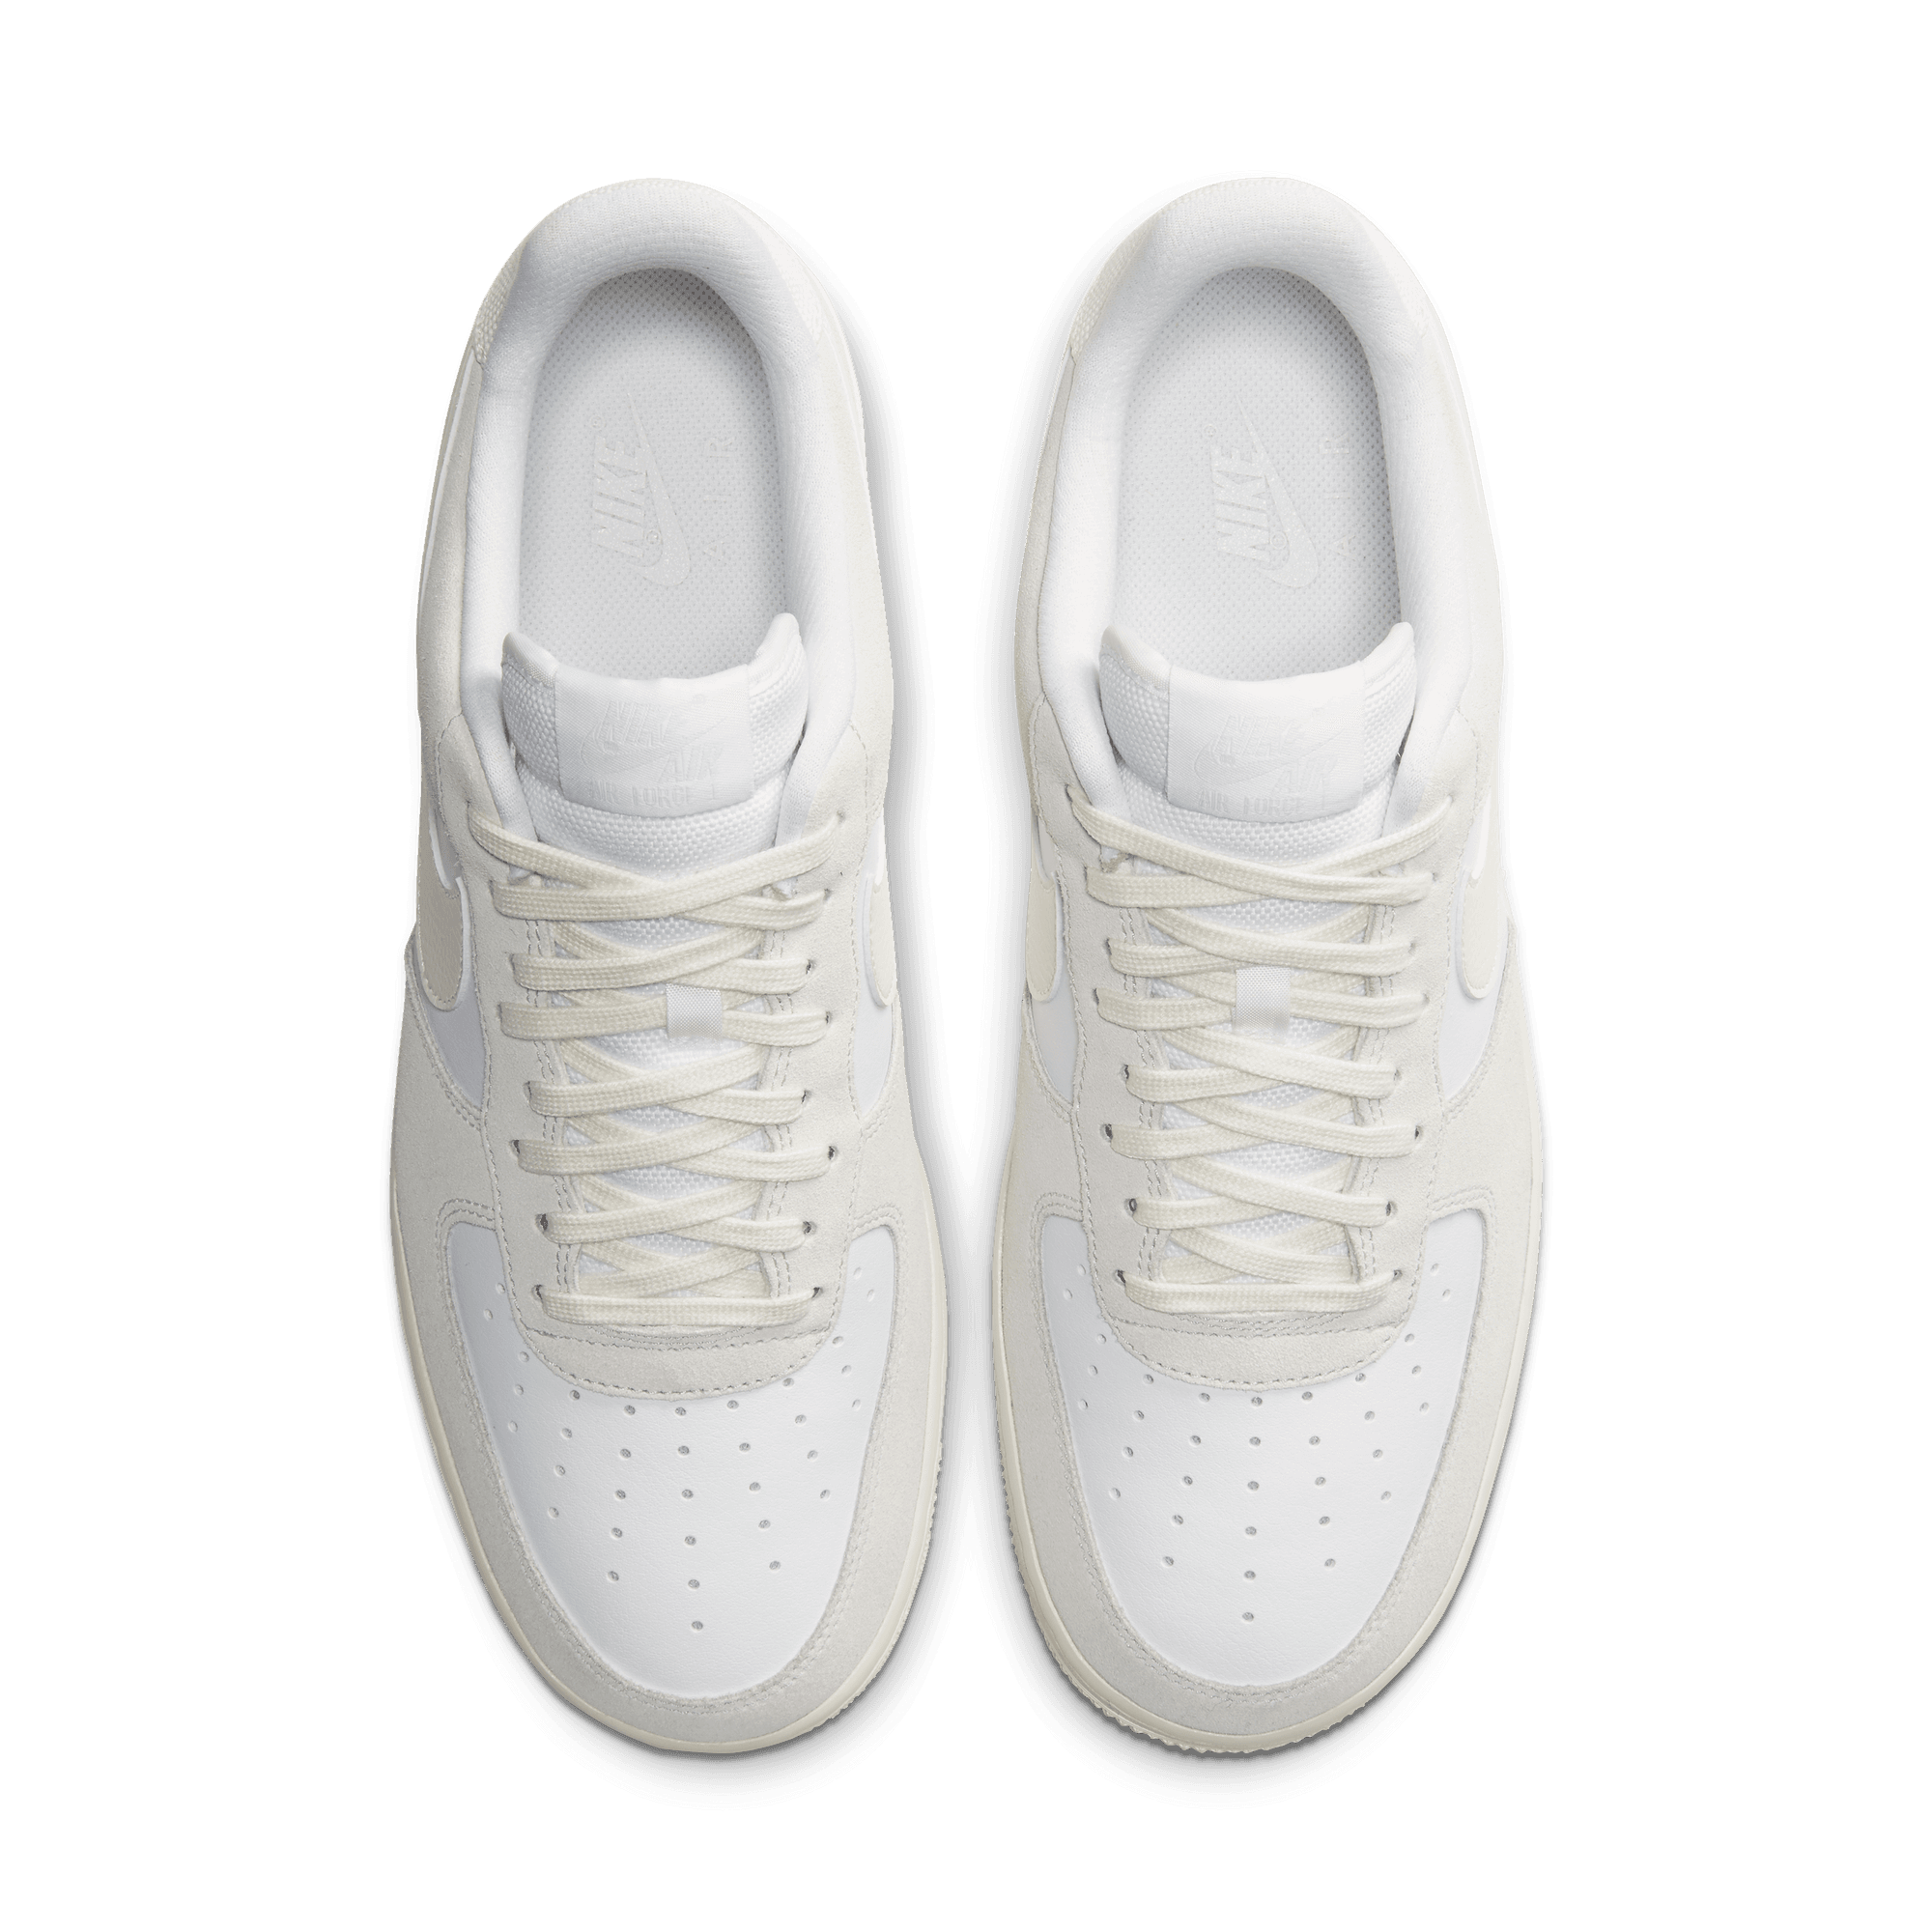 Nike NIKE AIR FORCE 1 LV8 Grey/White - WHITE/SAIL-PLATINUM TINT